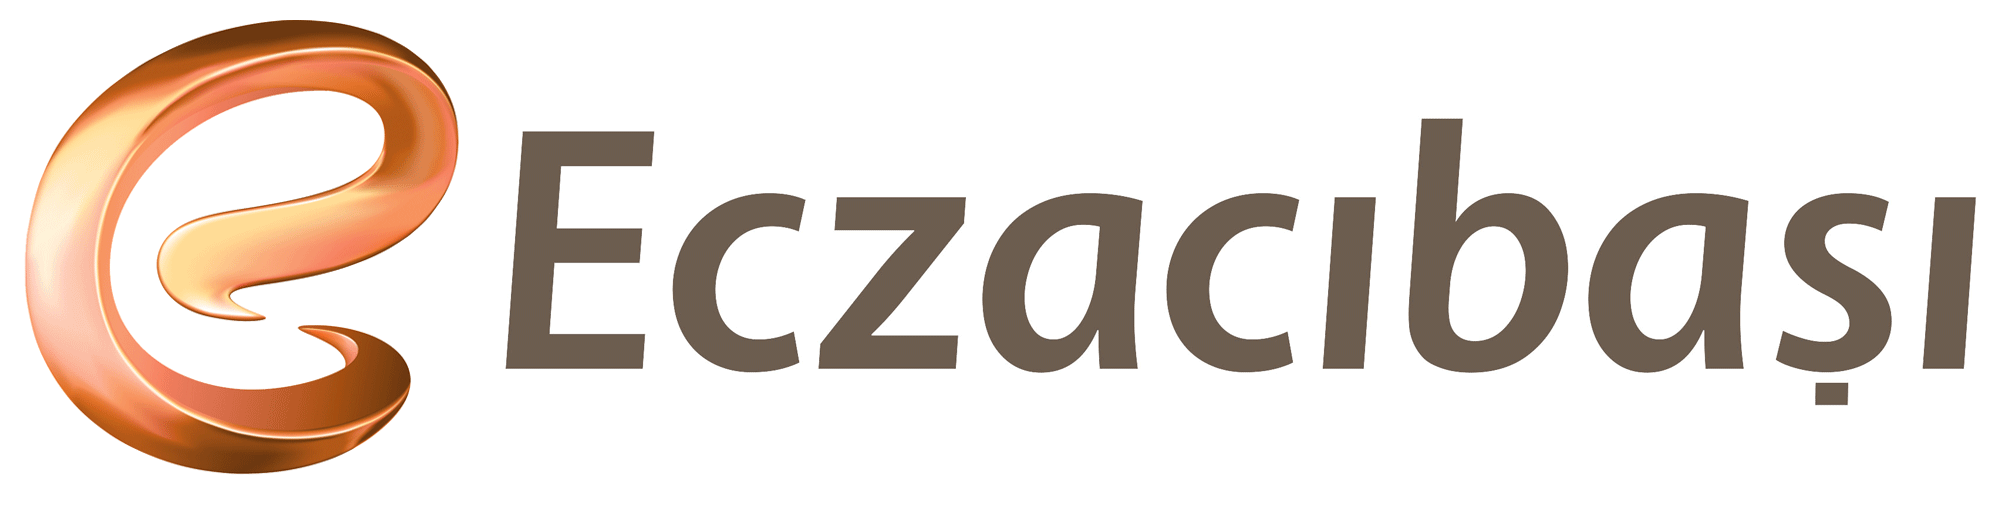 Eczacibasi Holding